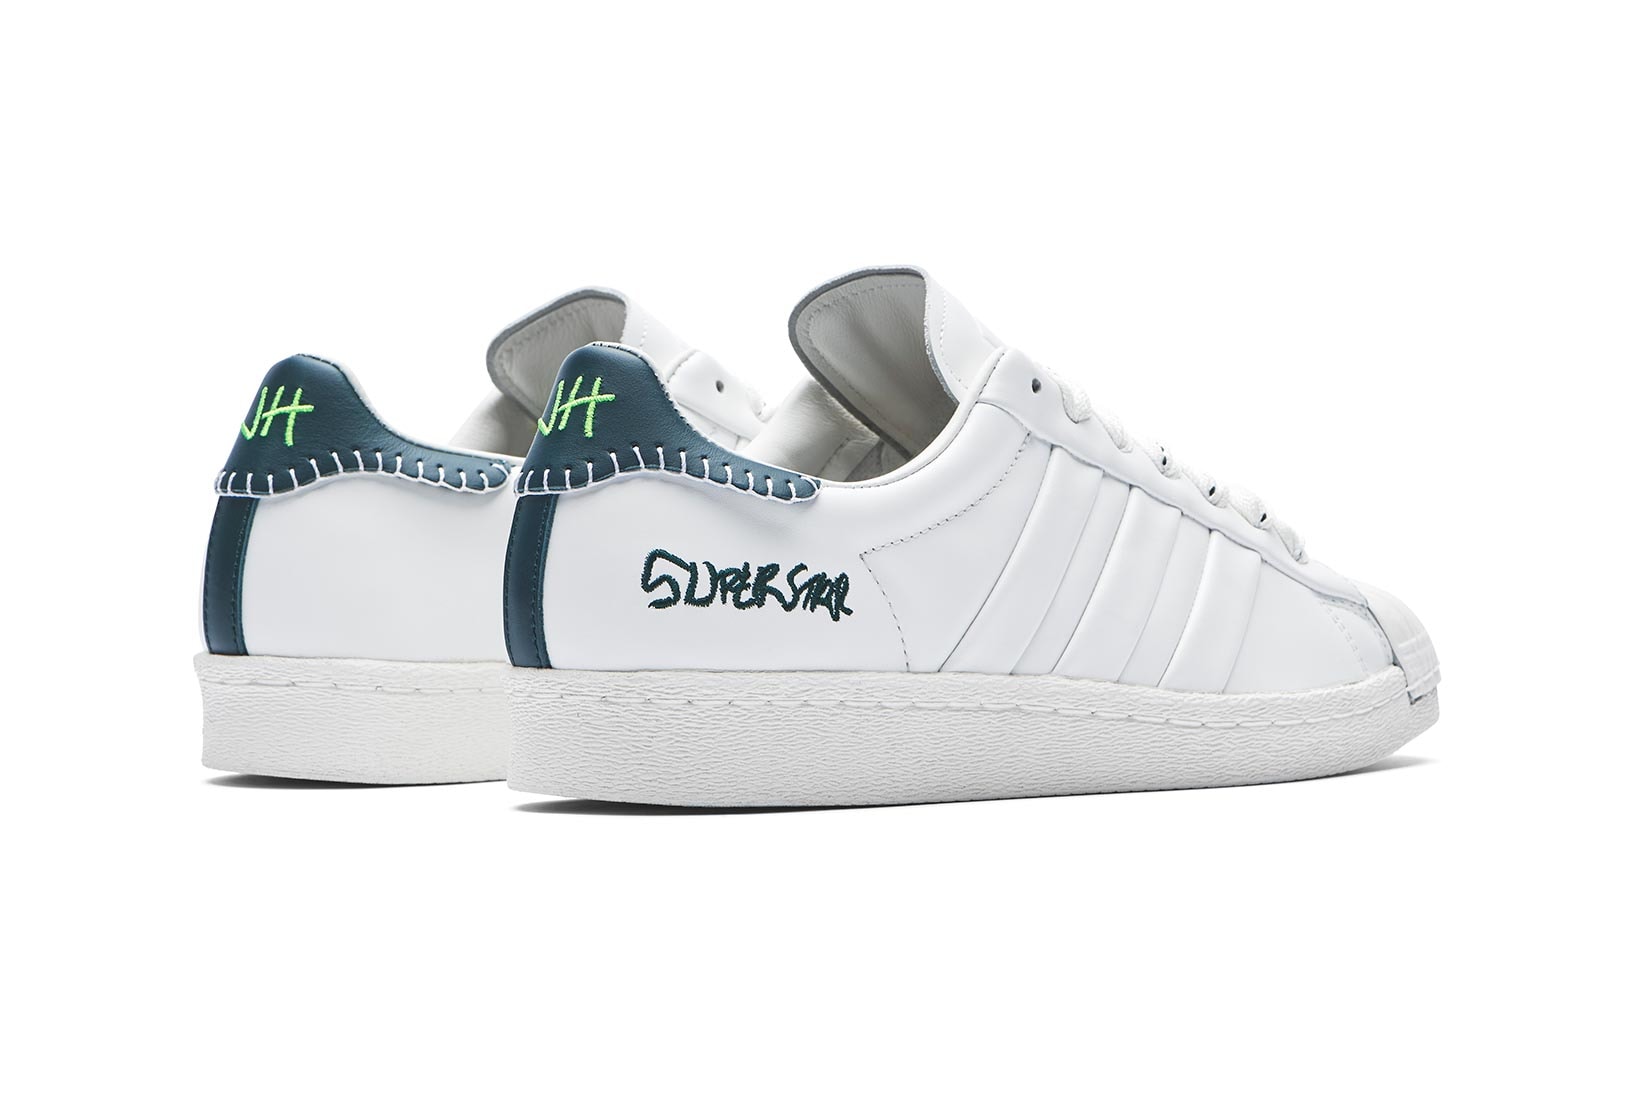 adidas originals jonah hill collaboration superstar sneakers white navy blue neon green shoes footwear sneakerhead